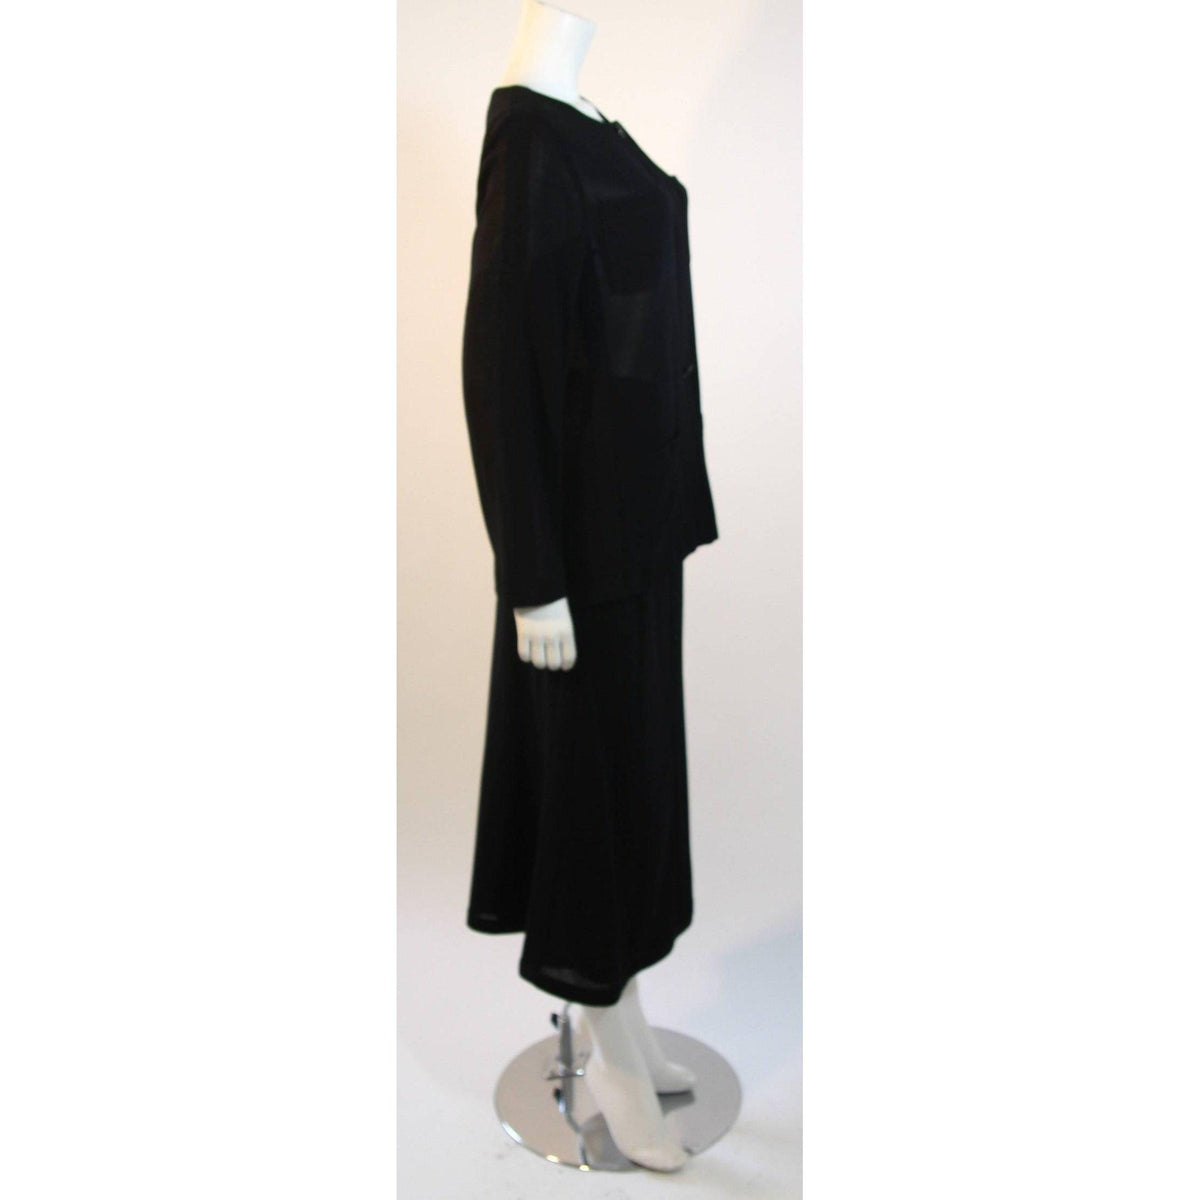 CHANEL Sheer Black Wool Top and Skirt Set